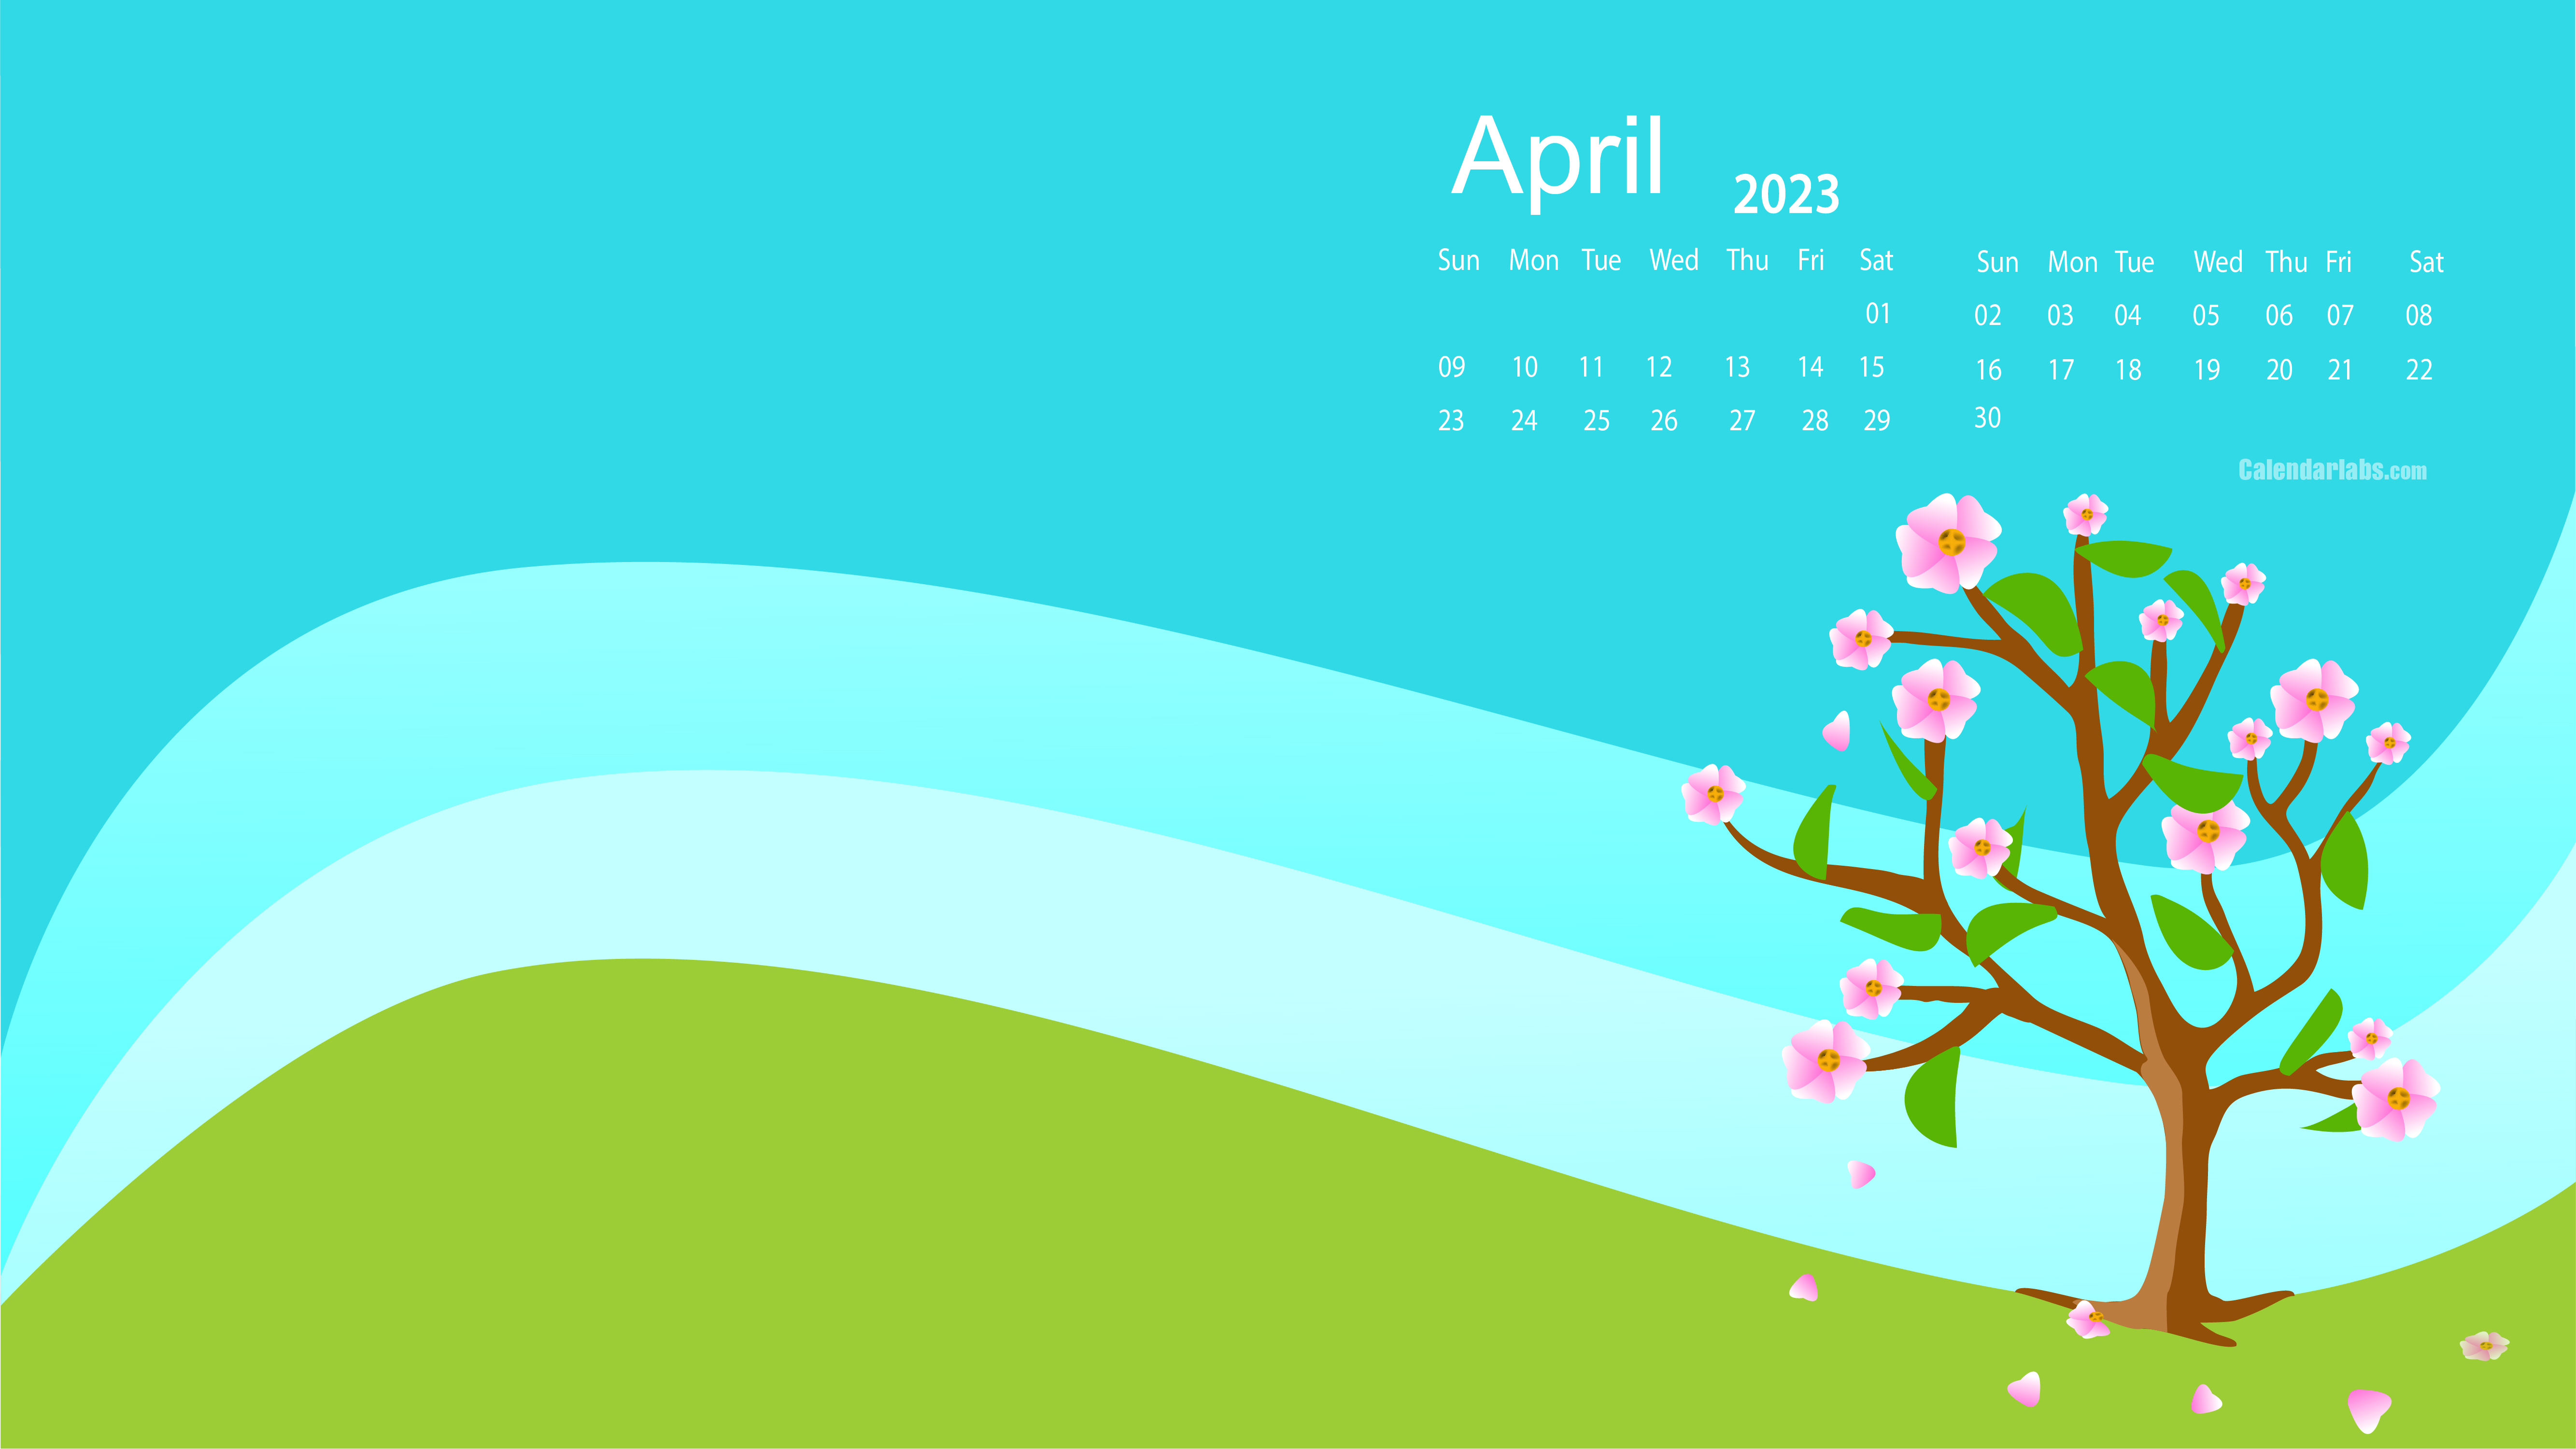 April 2023 Desktop Wallpaper Calendar